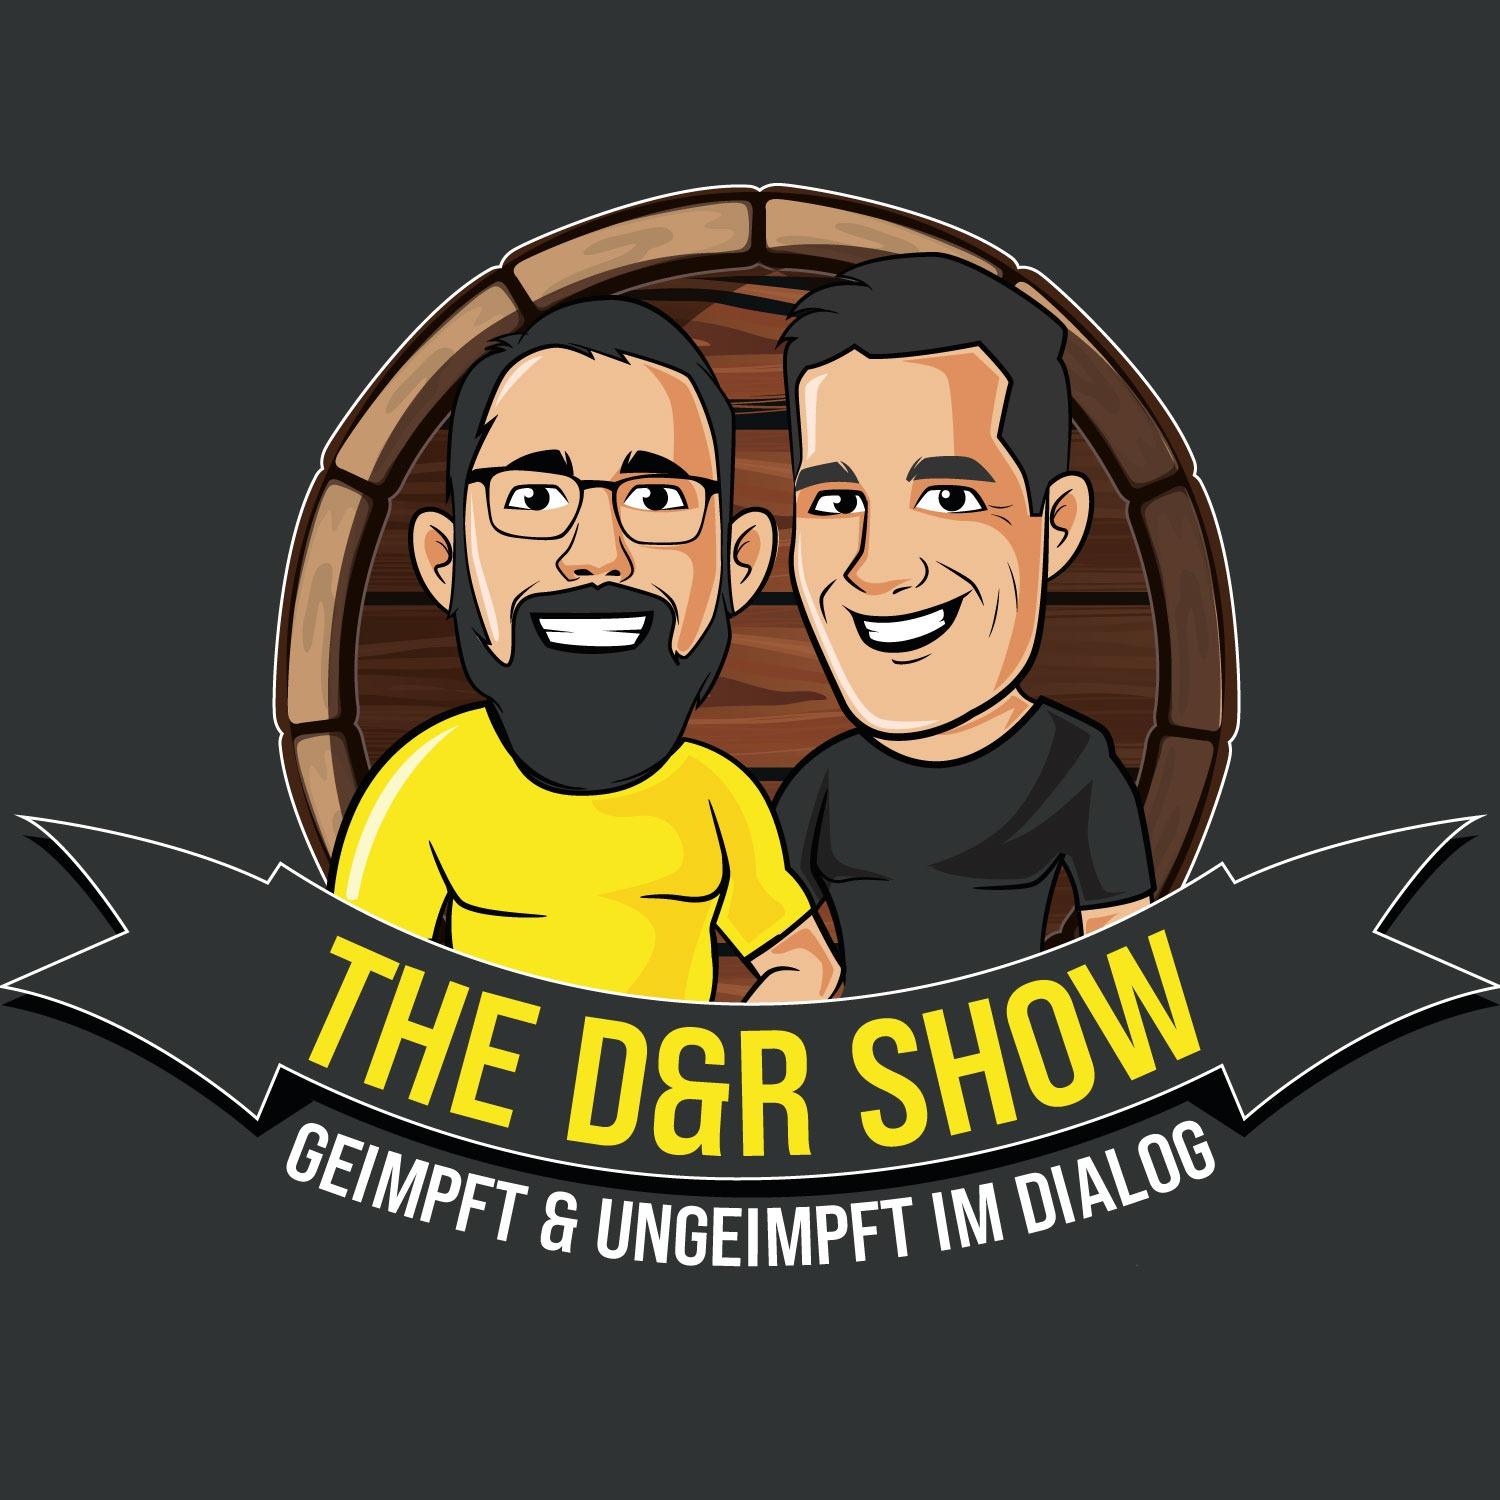 The D&R Show